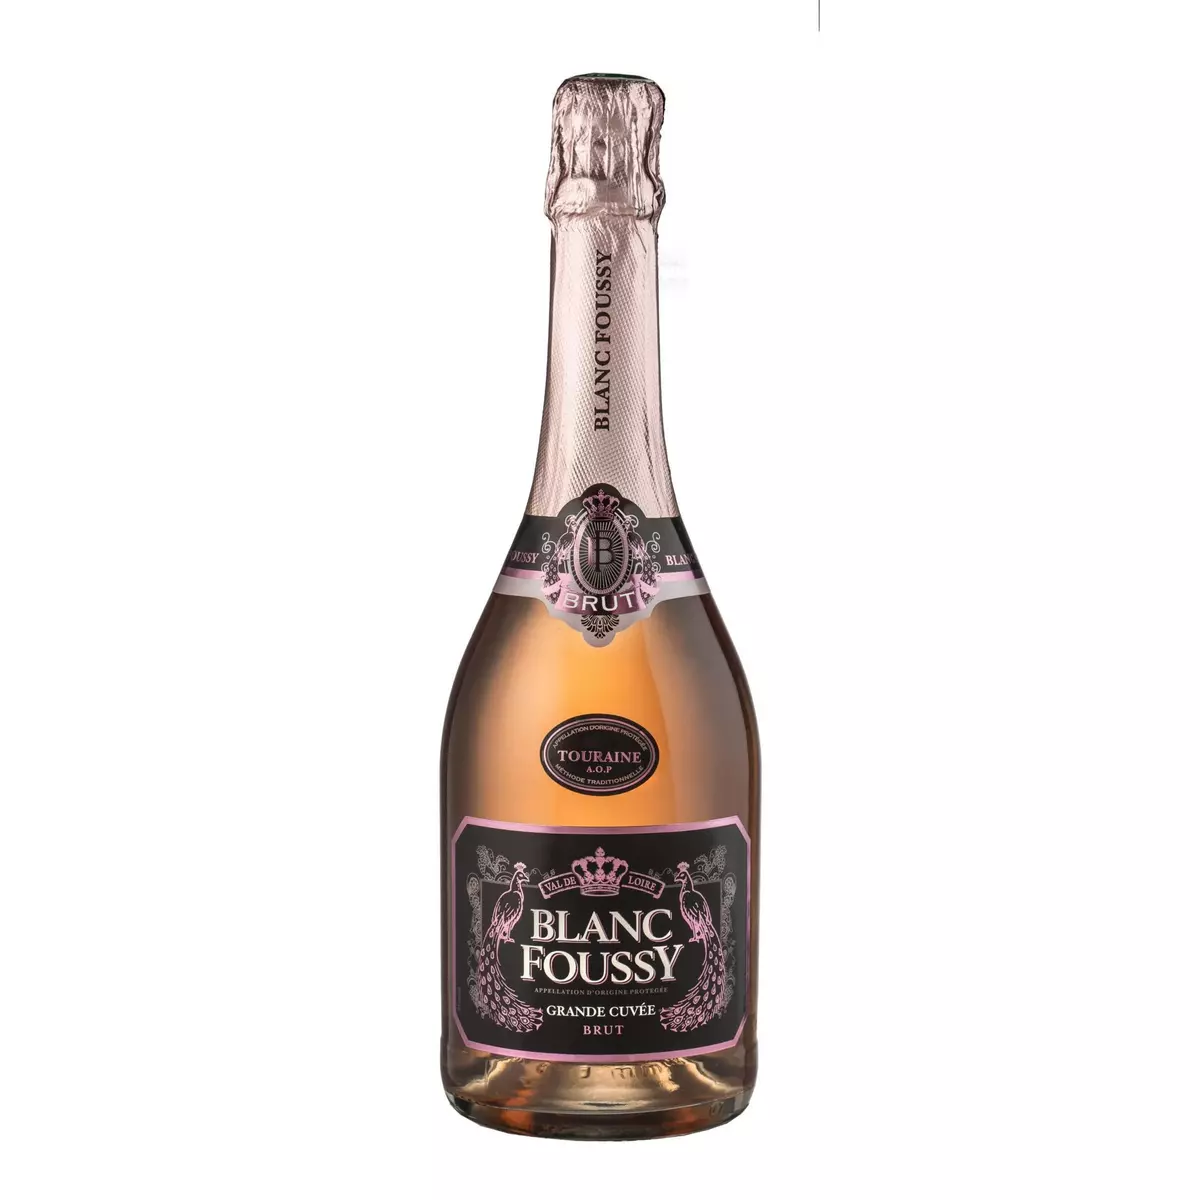 BLANC FOUSSY AOP Touraine Blanc Foussy rosé 75cl